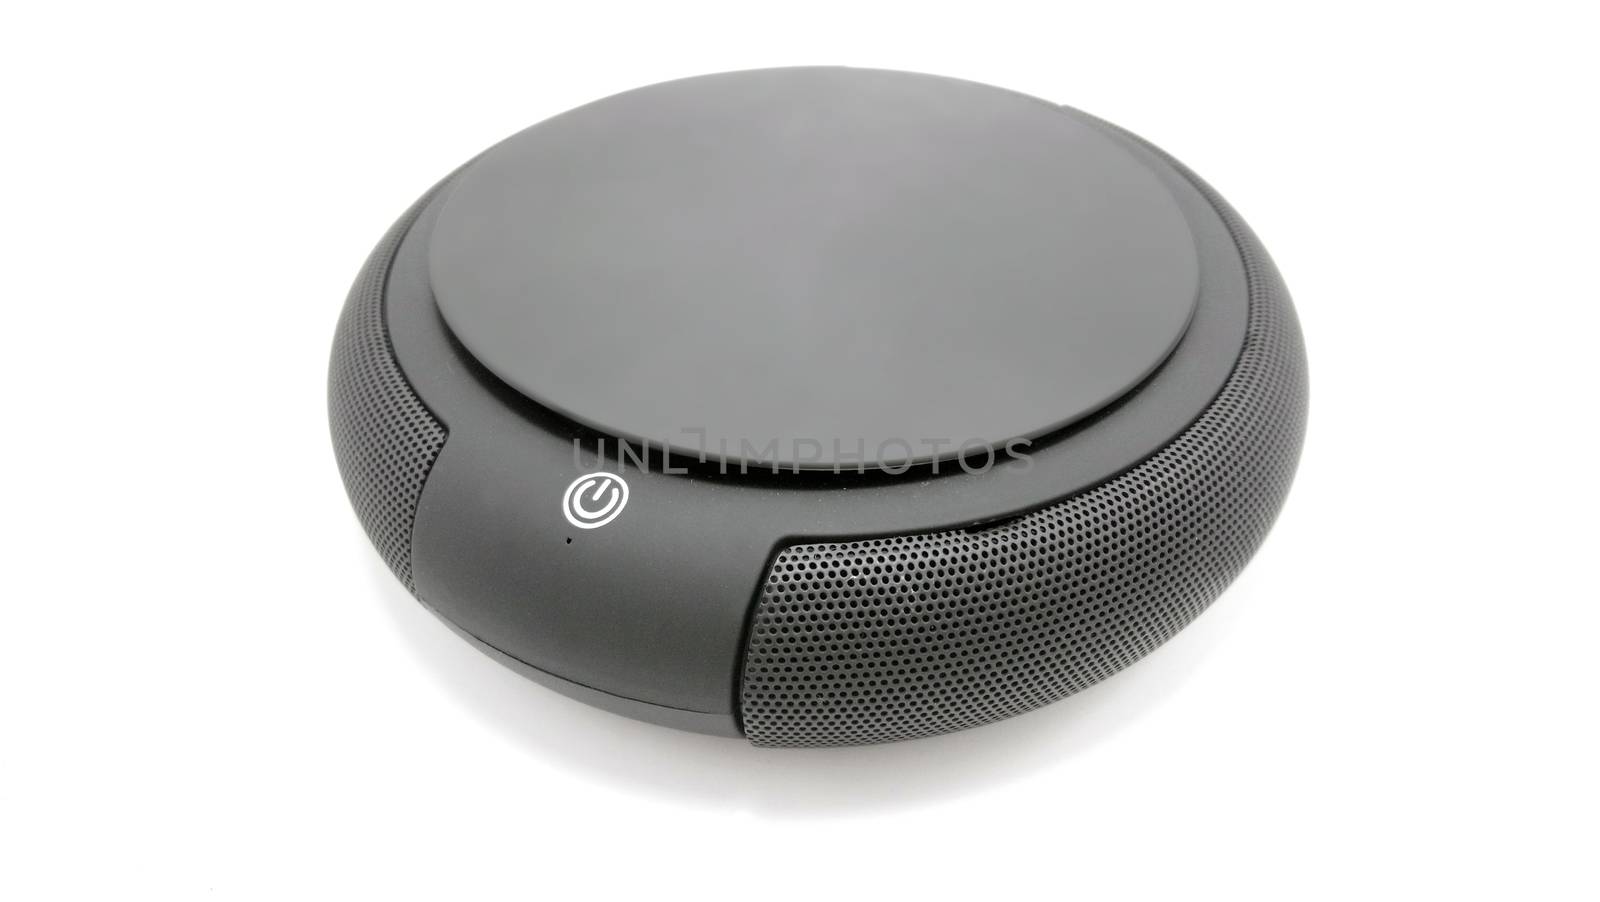 Black circular wireless sound speaker use to listen music and entertainment